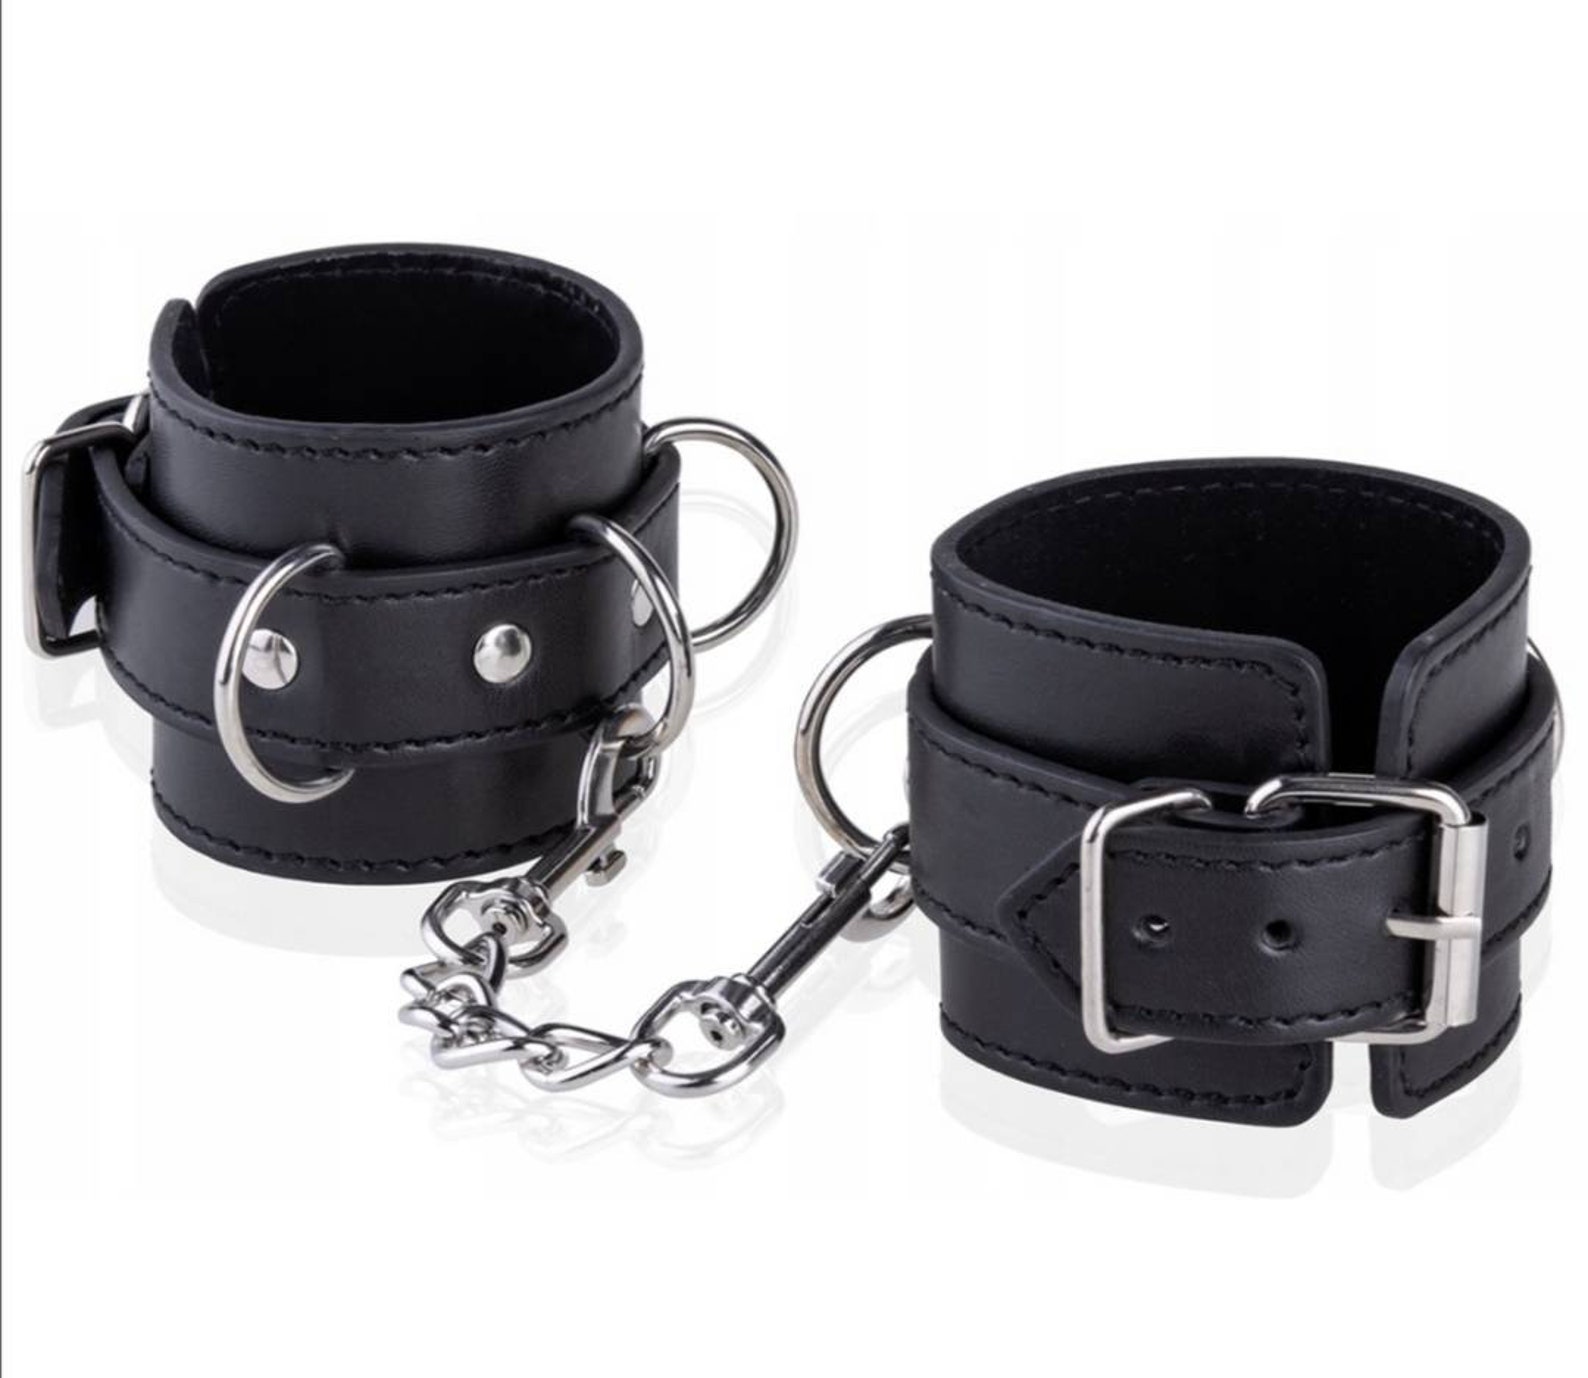 Simply Handcuffs ECO leather bondage BDSM fetish slave | Etsy